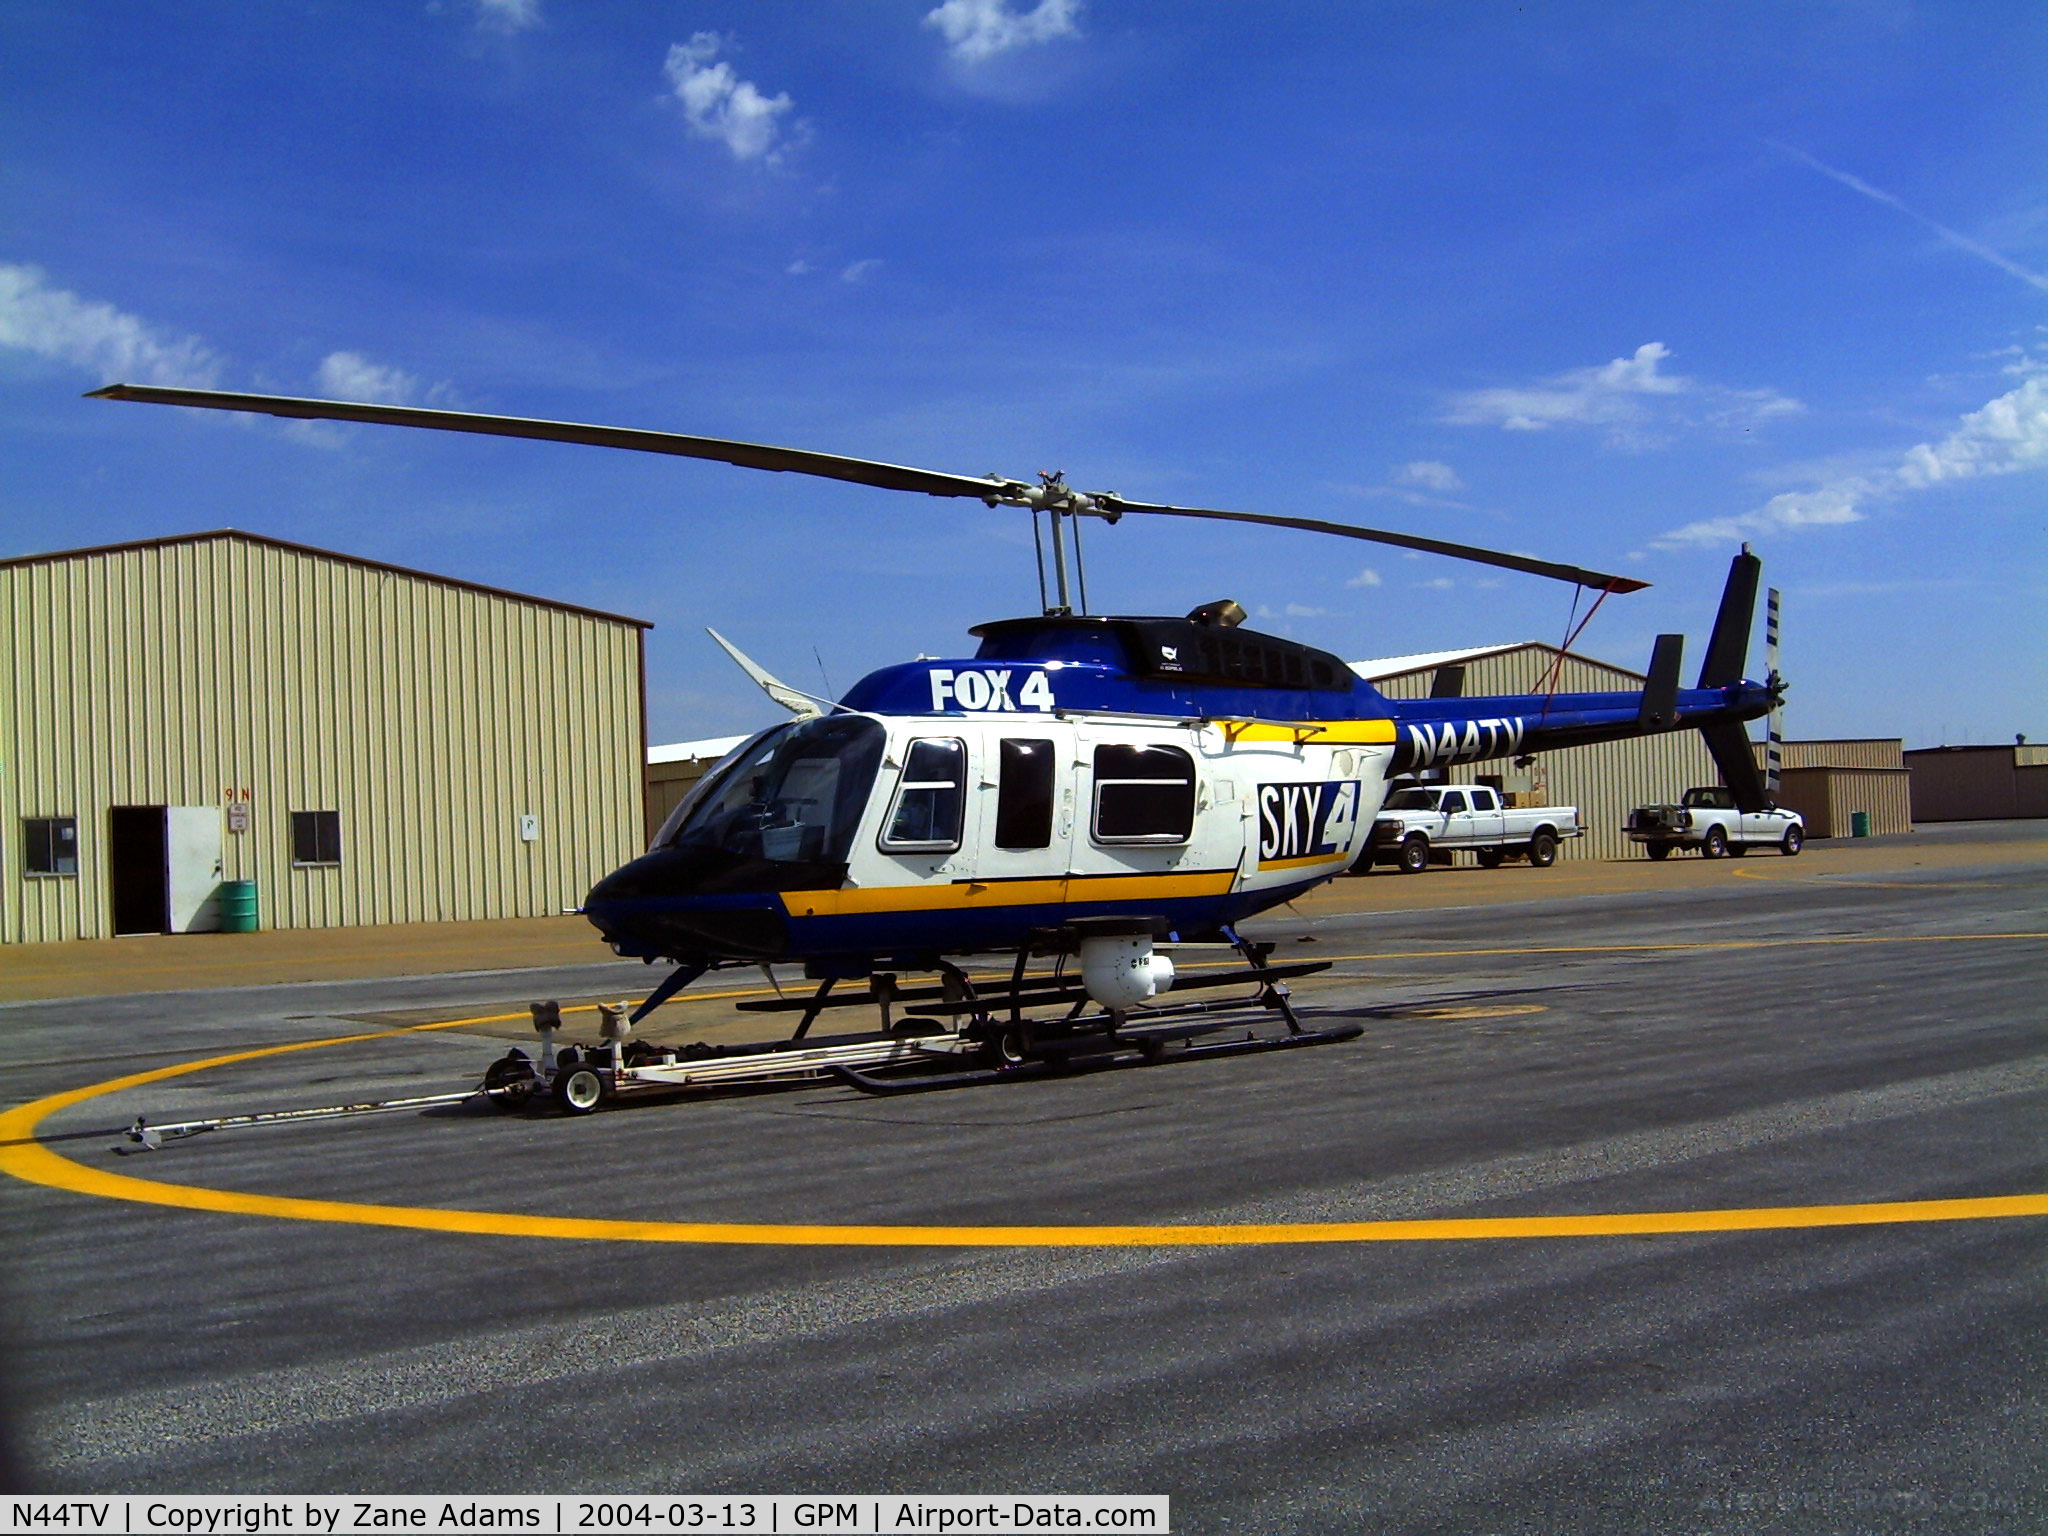 N44TV, 1979 Bell 206L-1 LongRanger II C/N 45208, KDFW TV traffic and news helo Dallas Ft. Worth